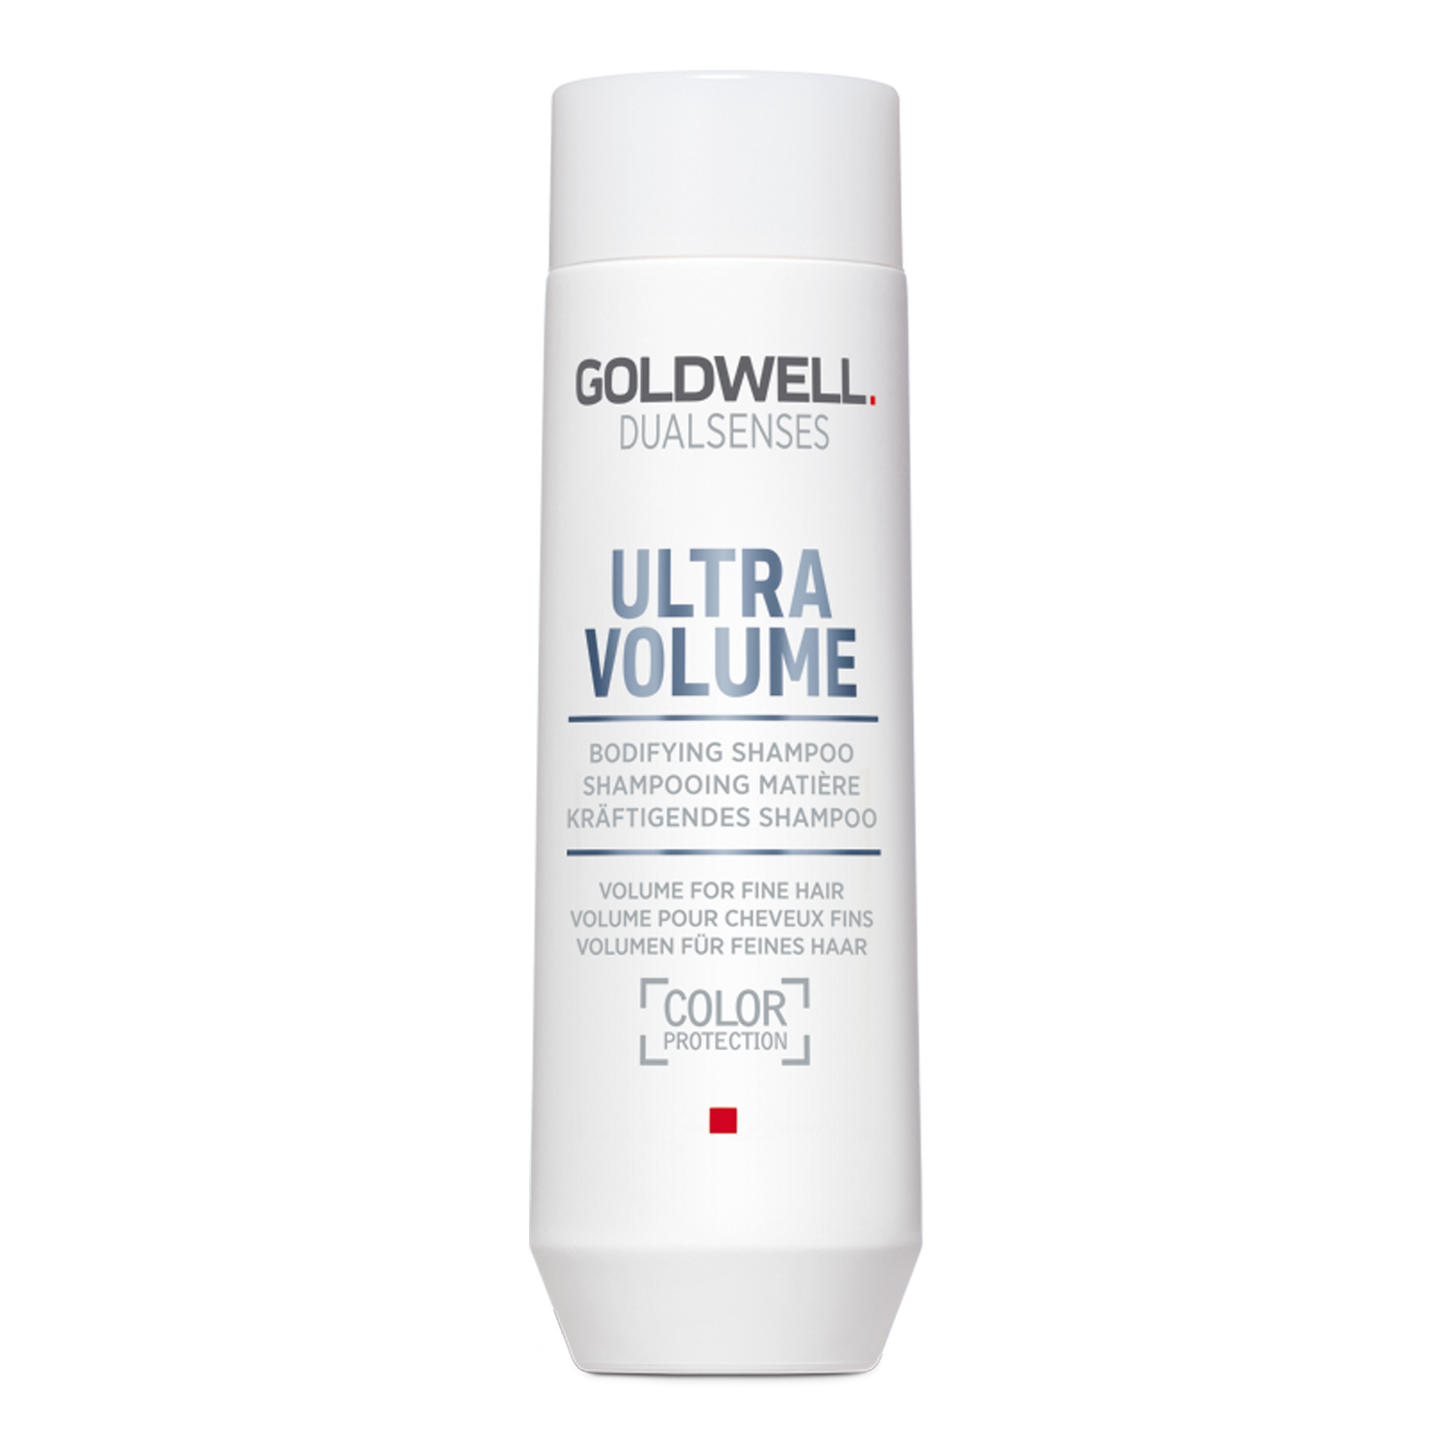 Dualsenses Ultra Volume Bodifying Shampoo 30mL